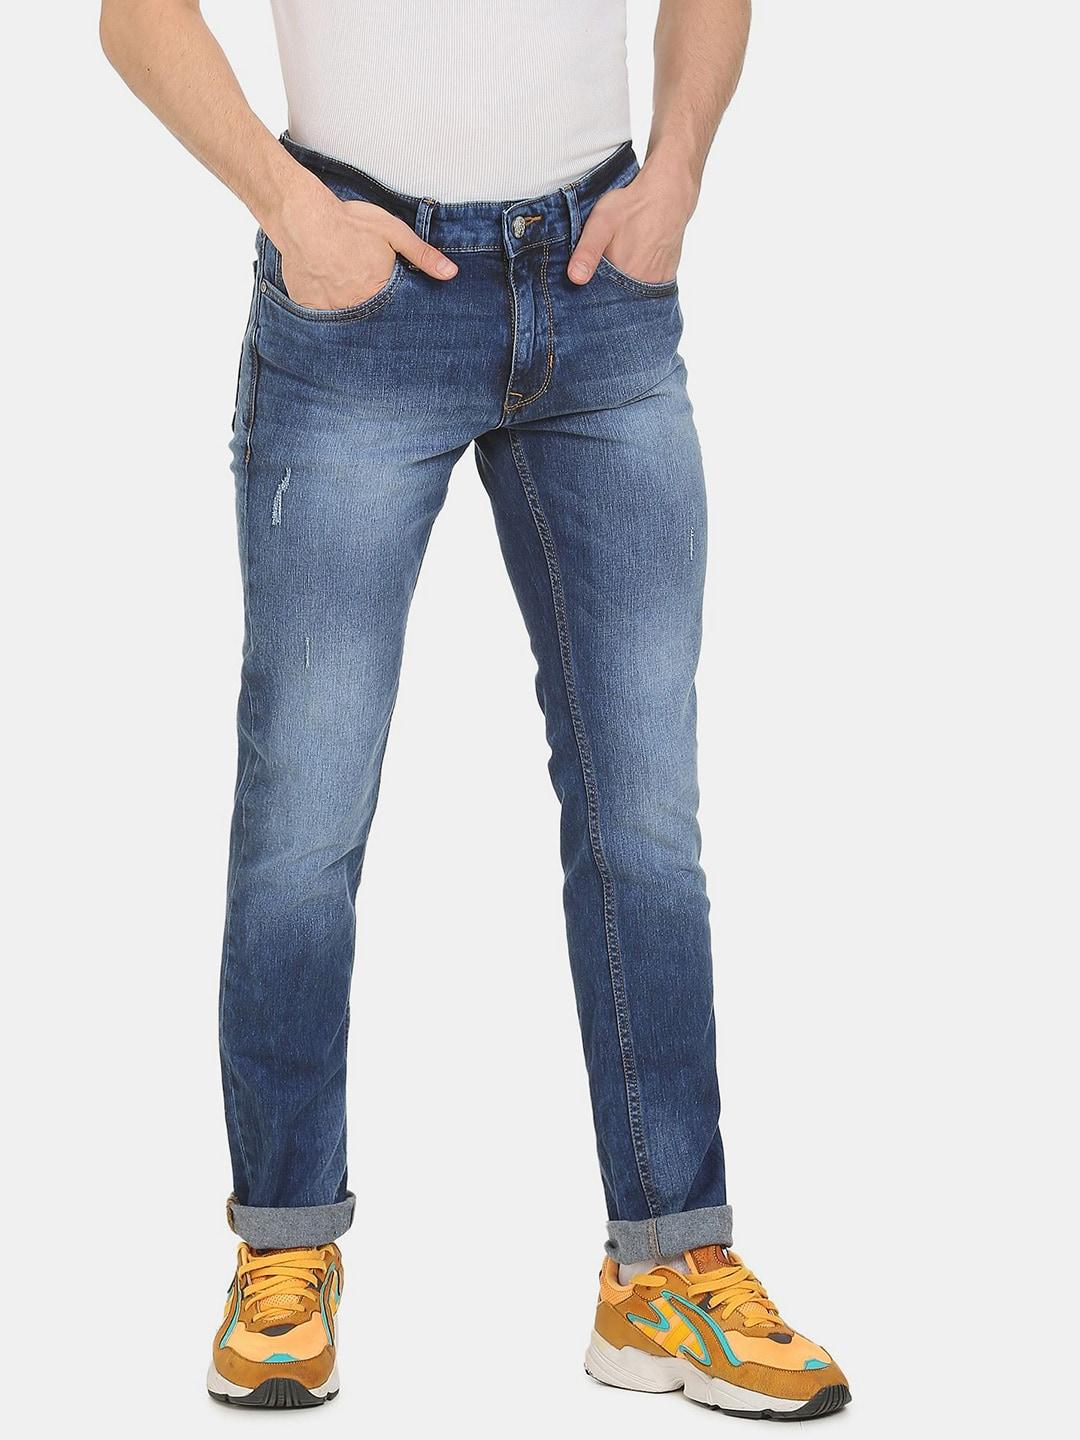 u.s. polo assn. denim co. men blue slim fit low distress heavy fade jeans